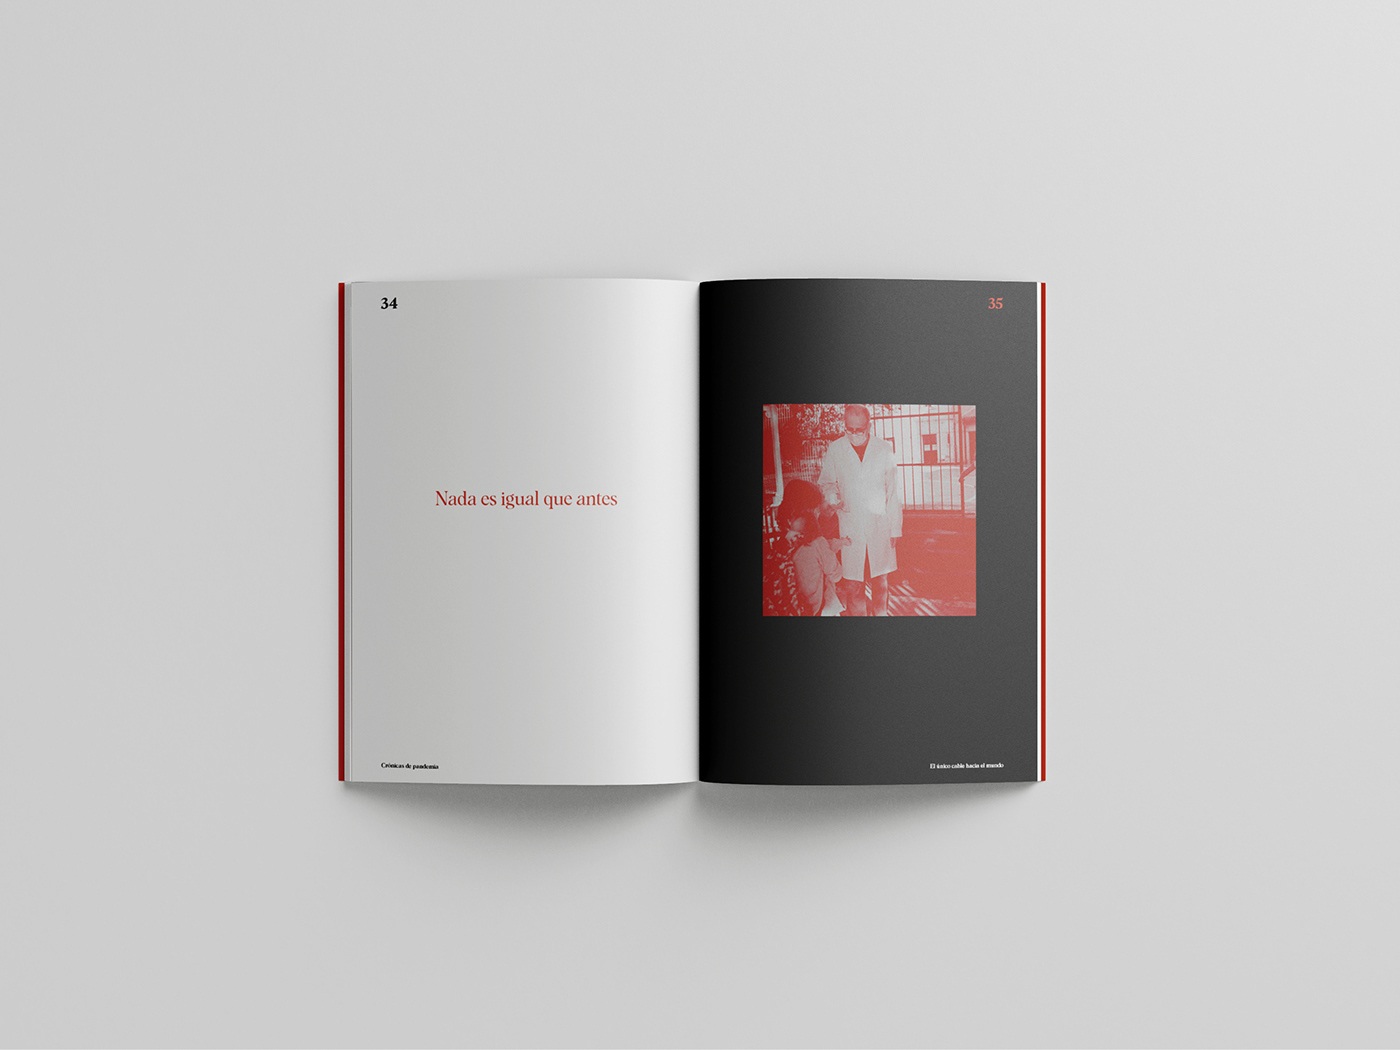 Anfibia cronicas Diseño editorial Libro diseño gráfico fadu pandemia rico uba